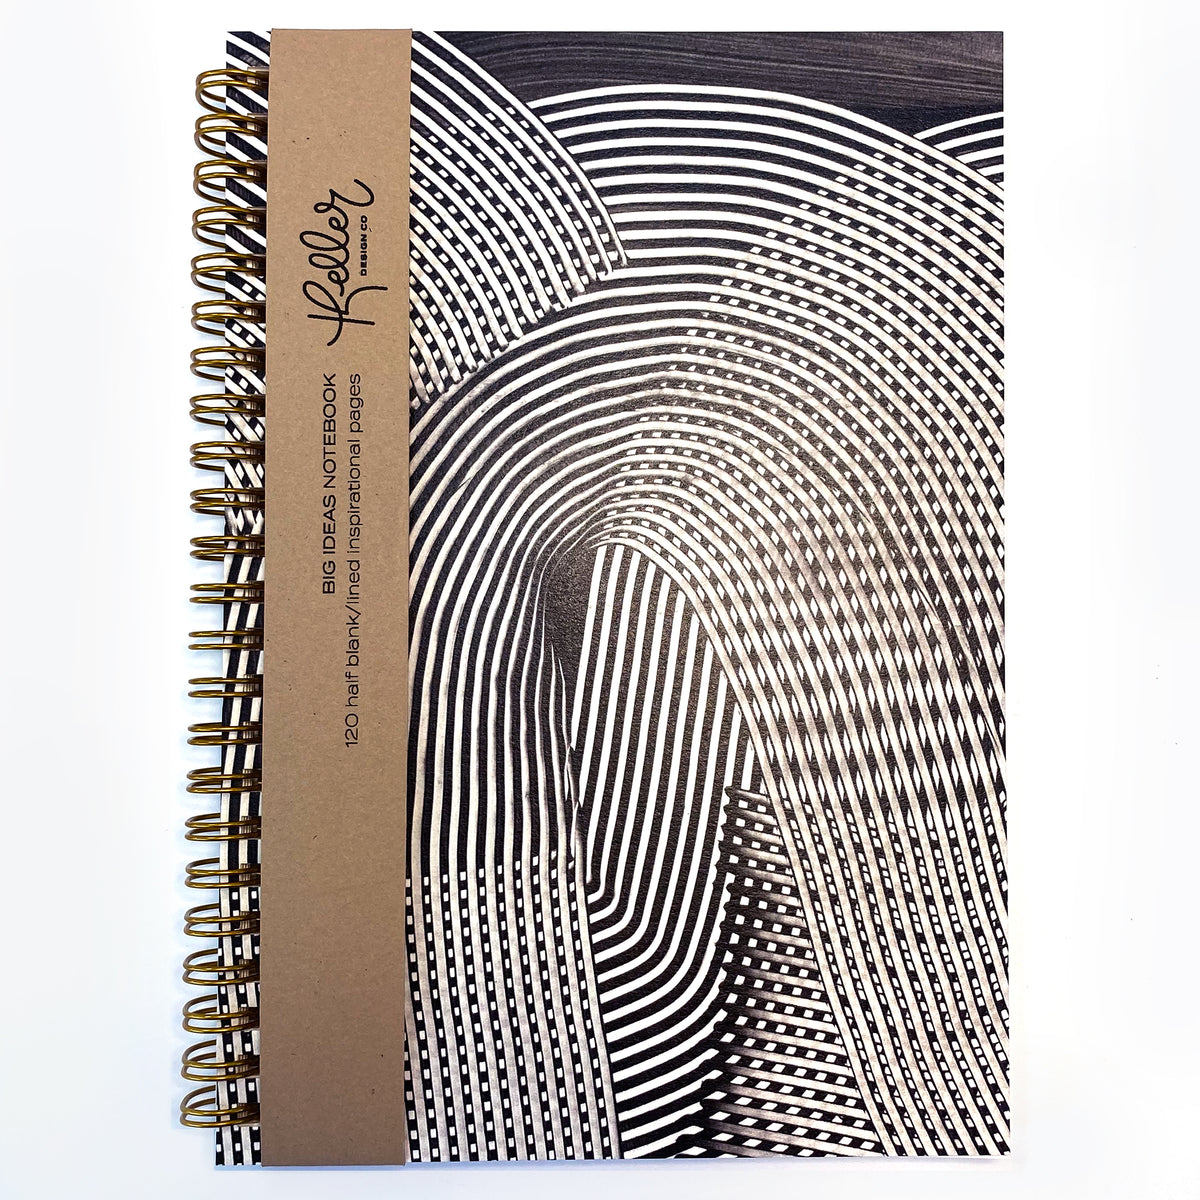 Curves Ahead: Black No.2-5.5”x8”- Big Ideas Spiral Bound Notebook